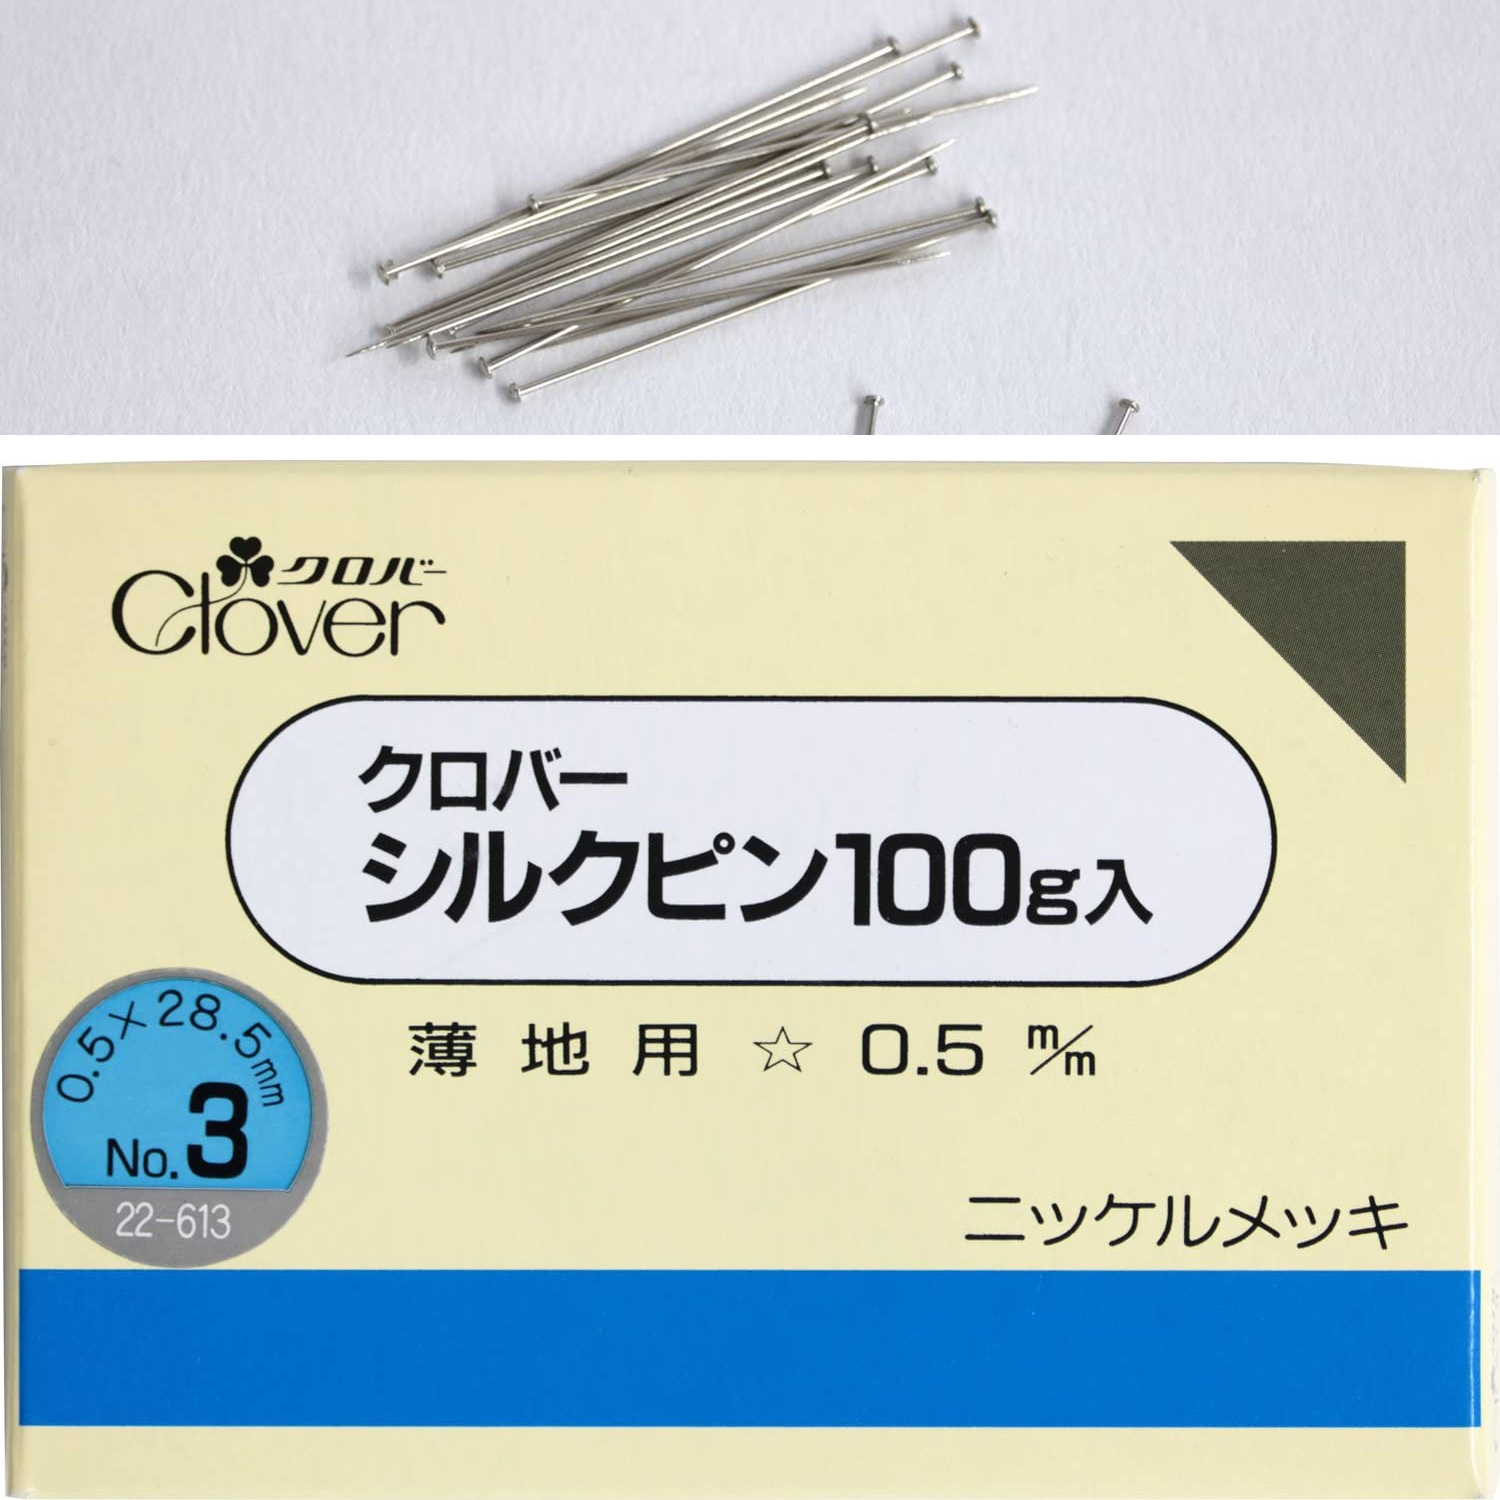 CL22-613 Silk Pins 100g No. 3 (pcs)